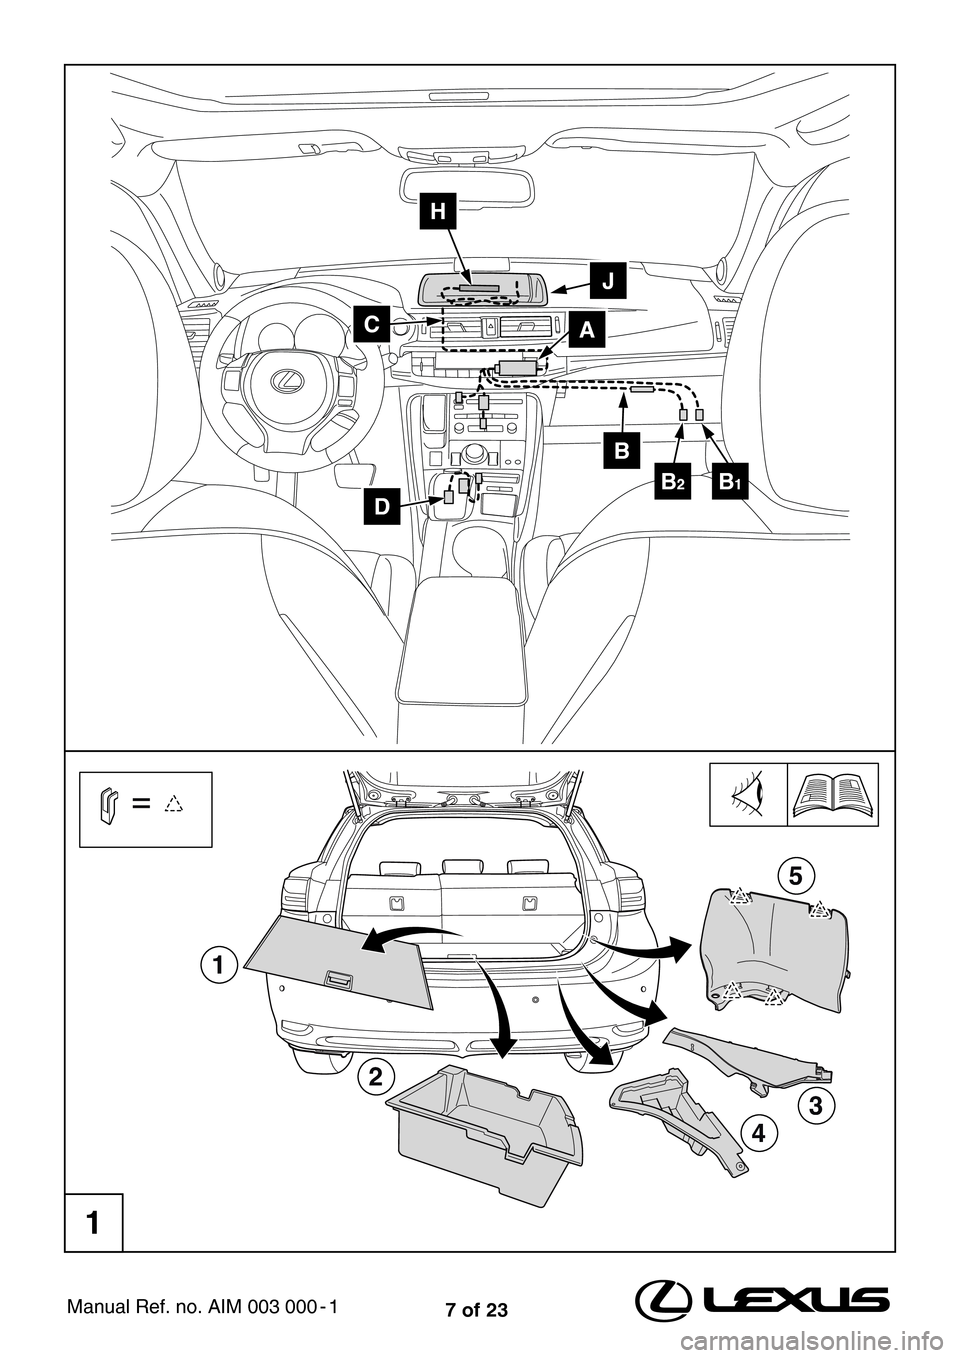 Lexus CT200h 2010  Navigation (LHD) (in English) 7 of 23Manual Ref. no. AIM 003 000 - 1
=
2
1
3
4
5
A
B
B2B1
C
D
J
H
1 